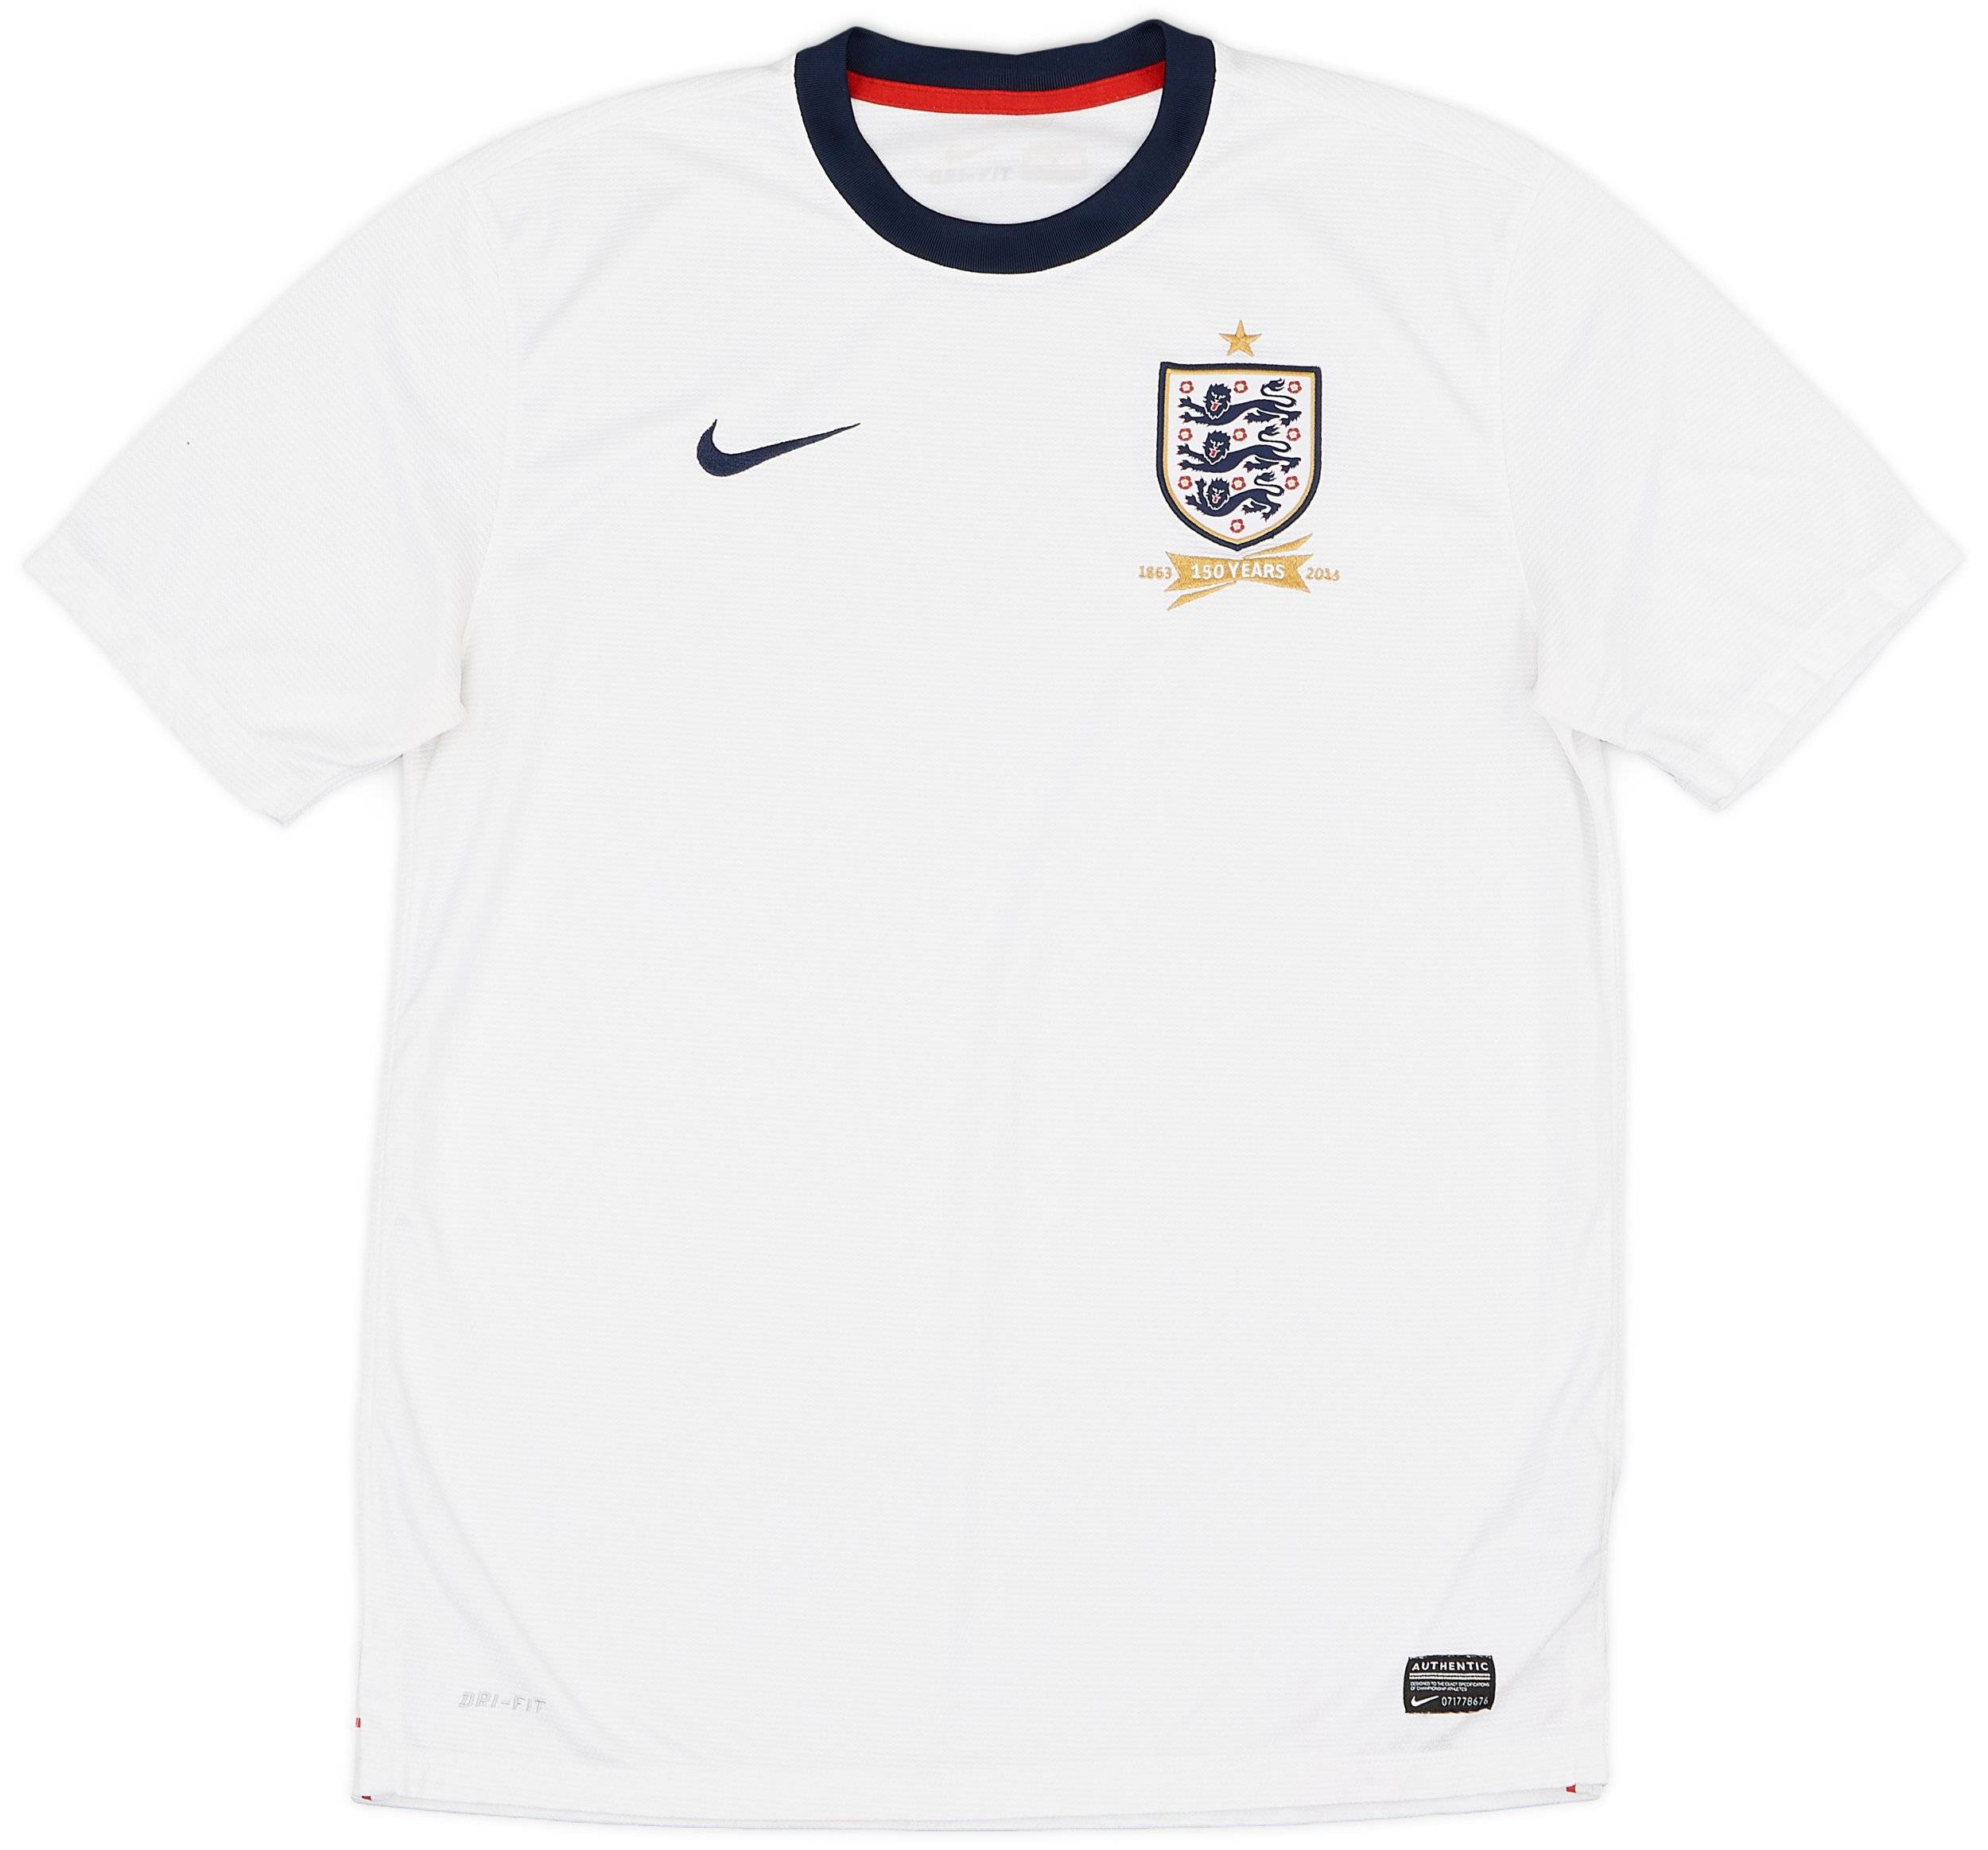 2013 England 150ᵗʰ Anniversary Home Shirt